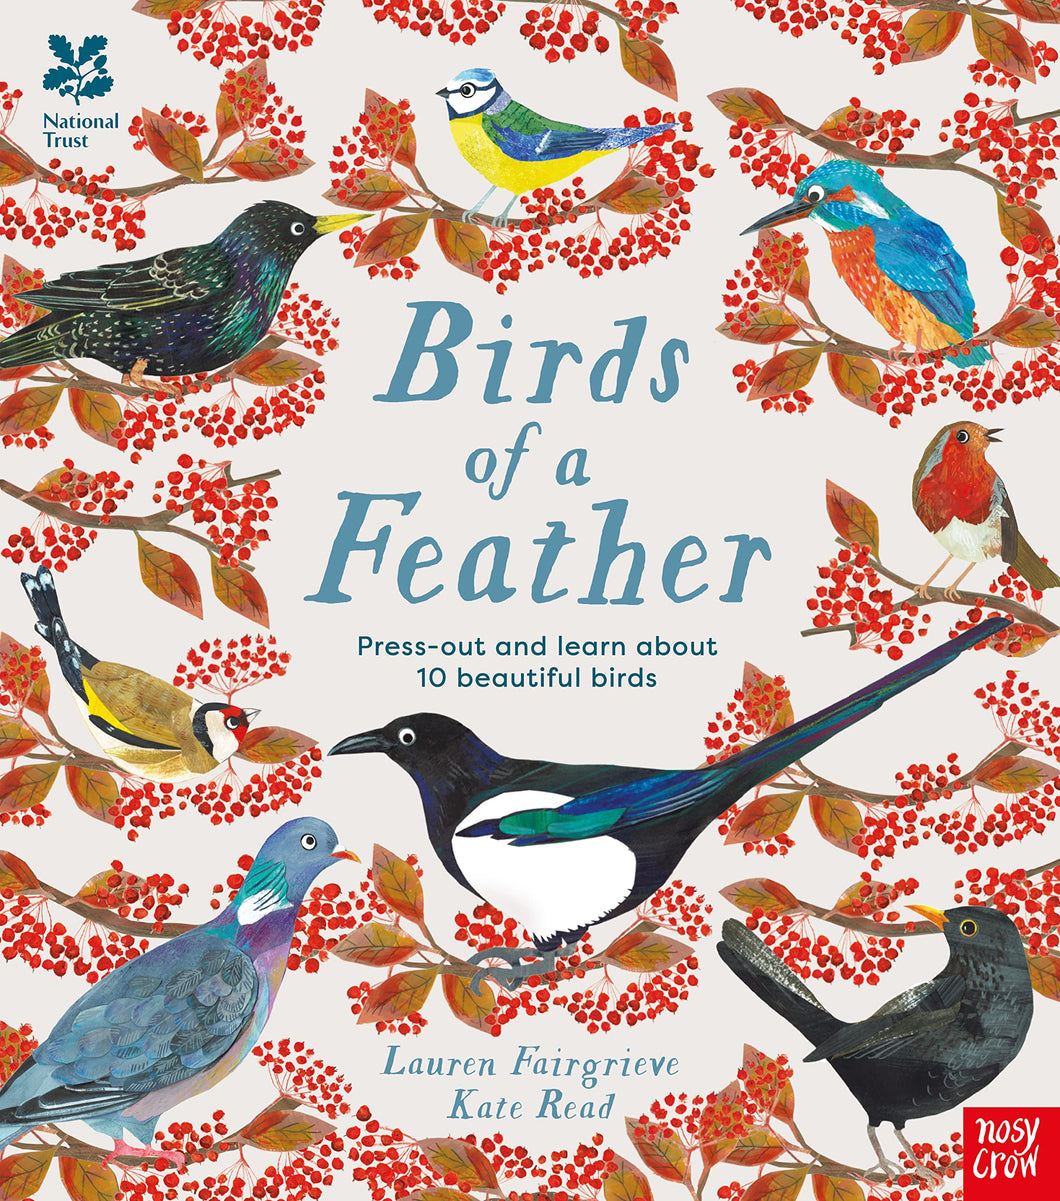 Birds of a Feather, Lauren Fairgrieve & Kate Read